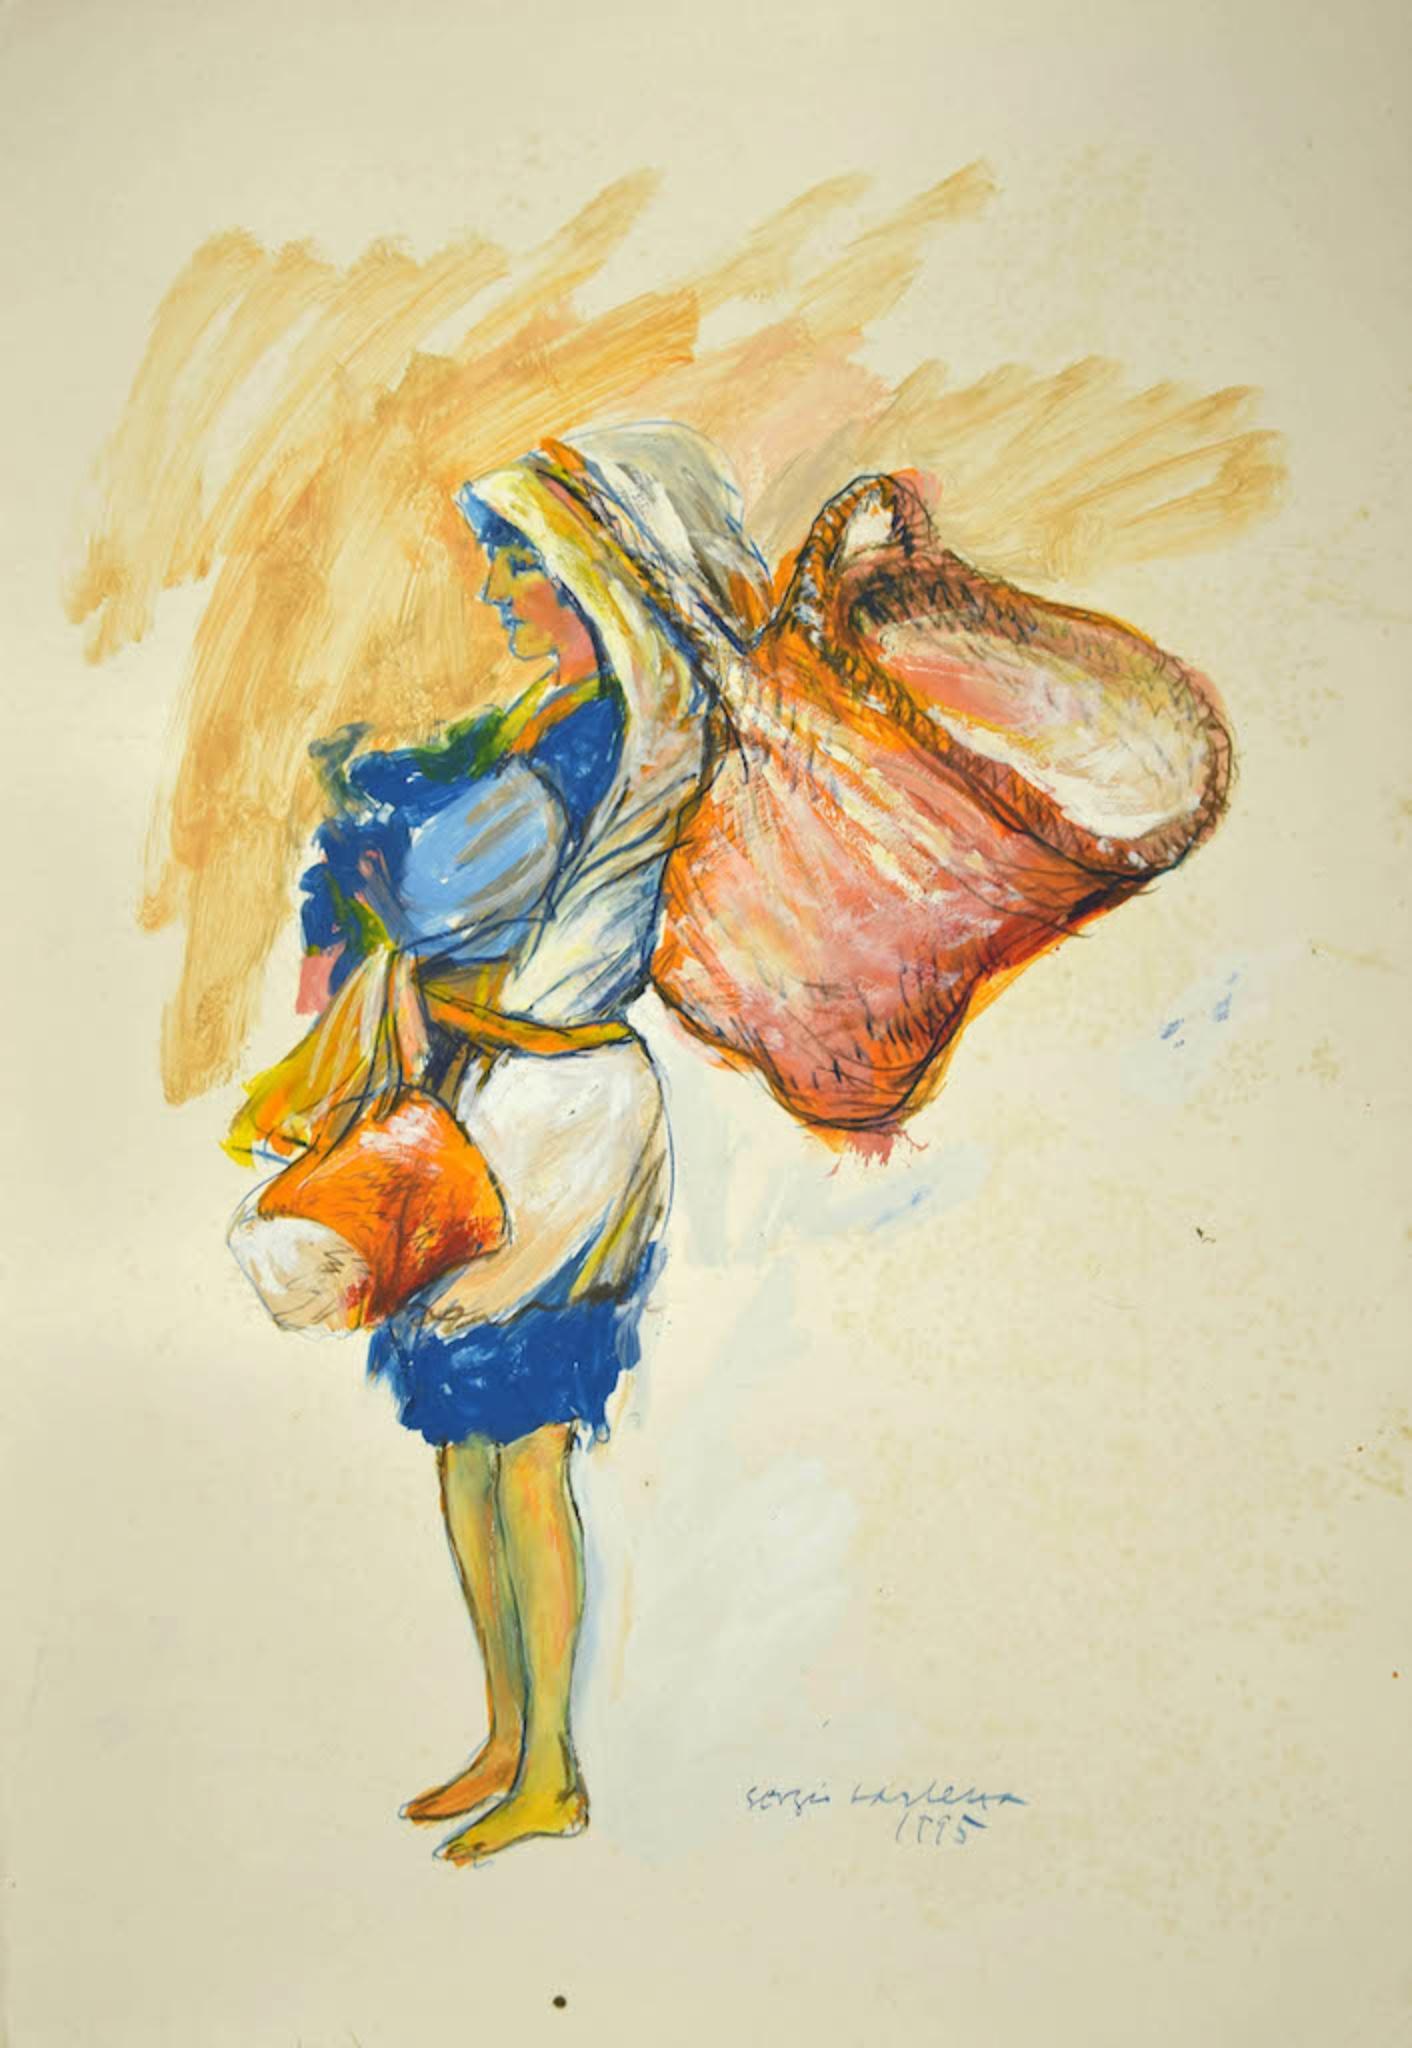 Woman With Baskets - Original Mixed Media by Sergio Barletta - 1995